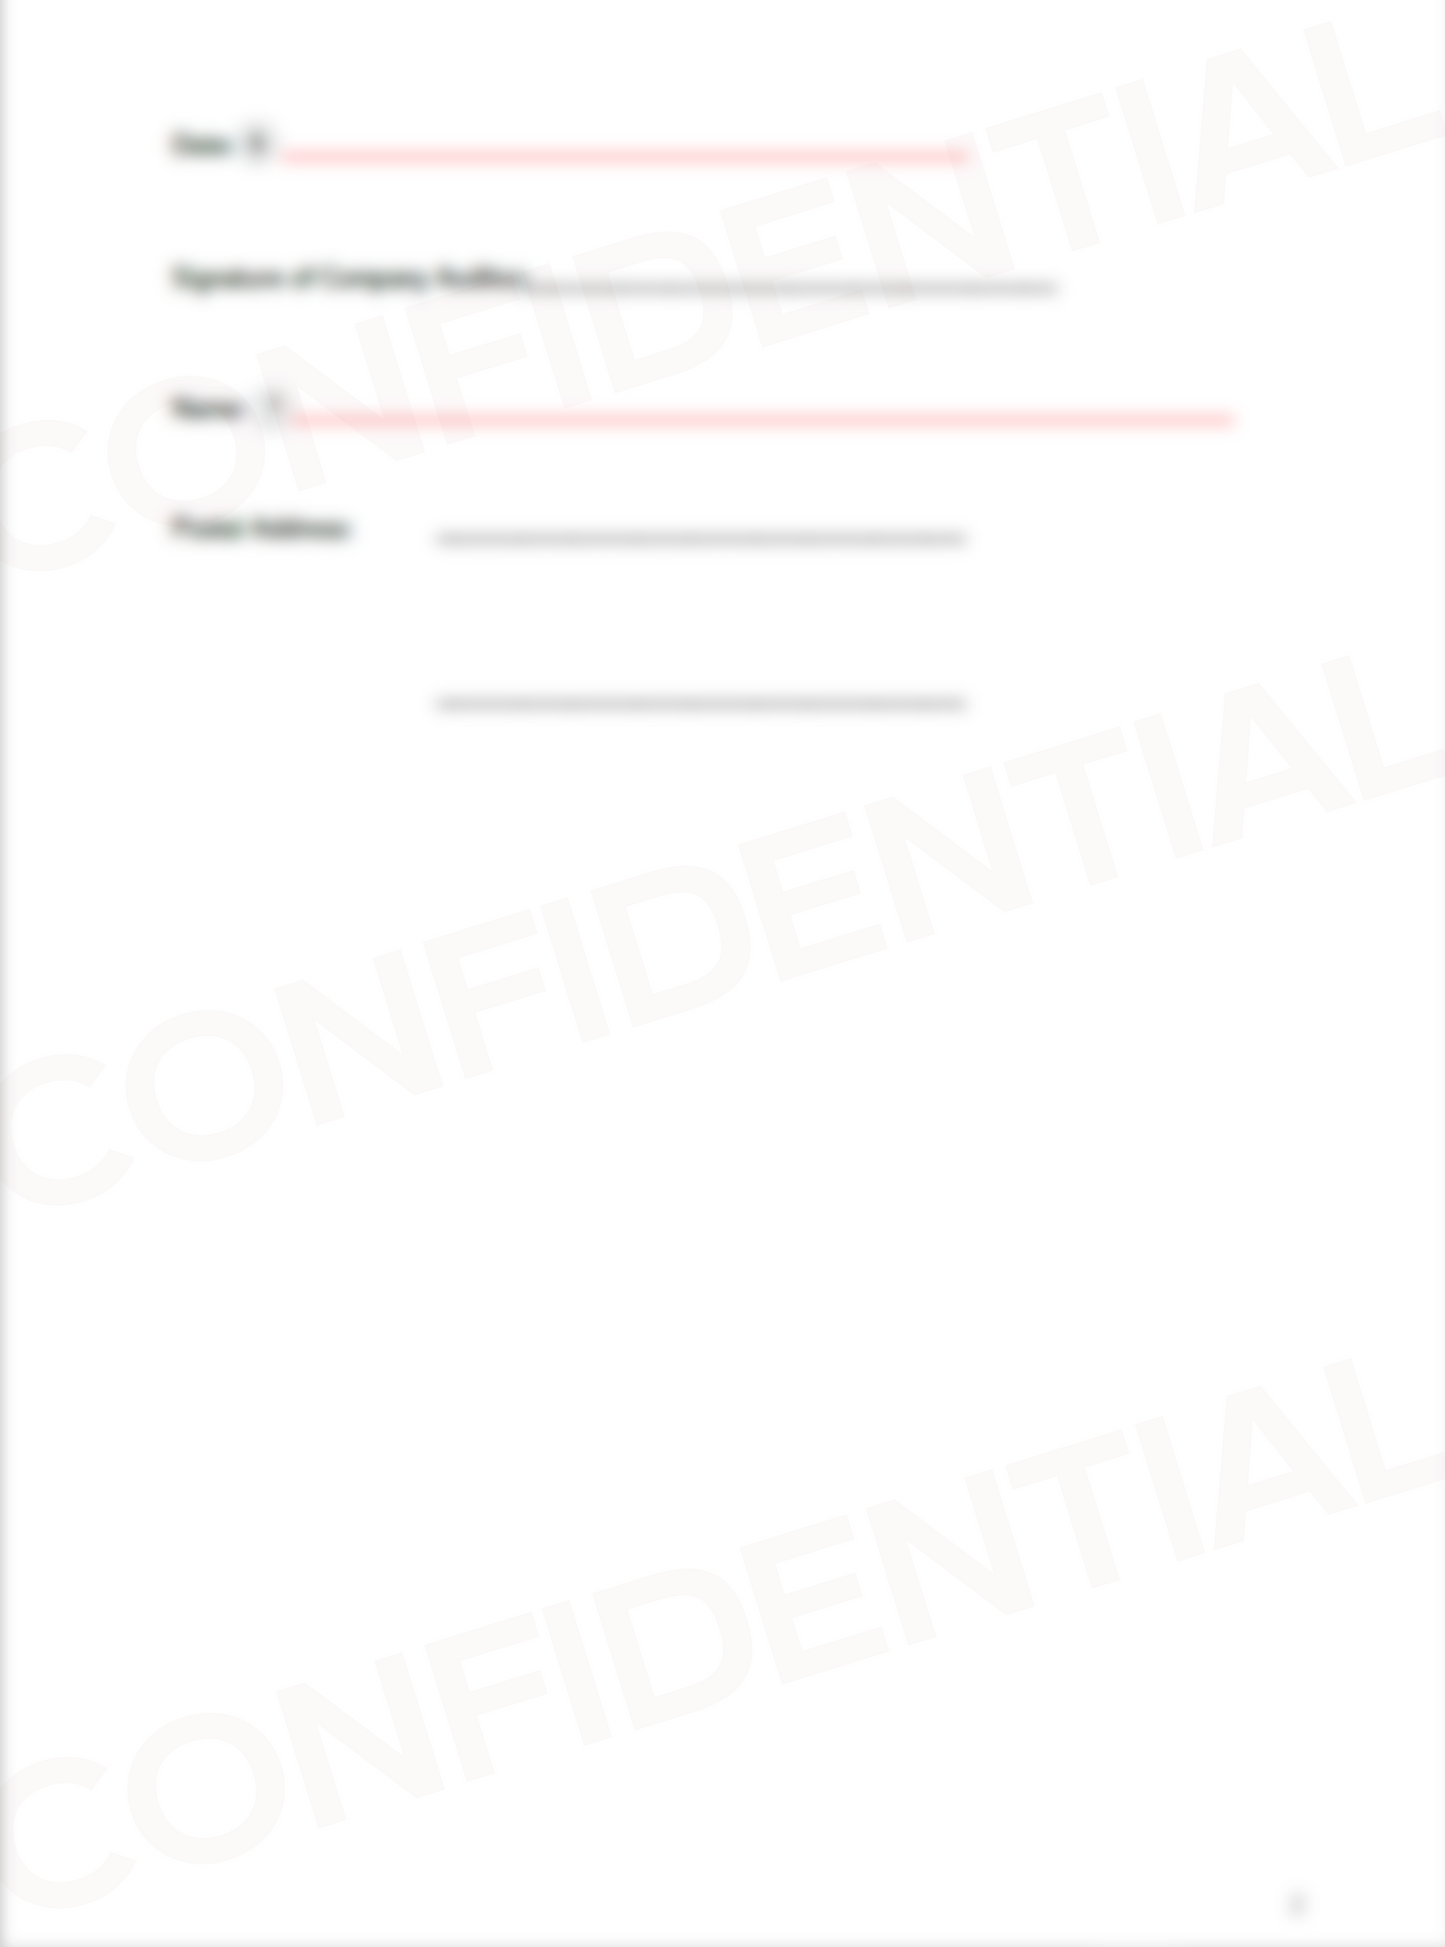 Downloadable Form D - Legal document for company details